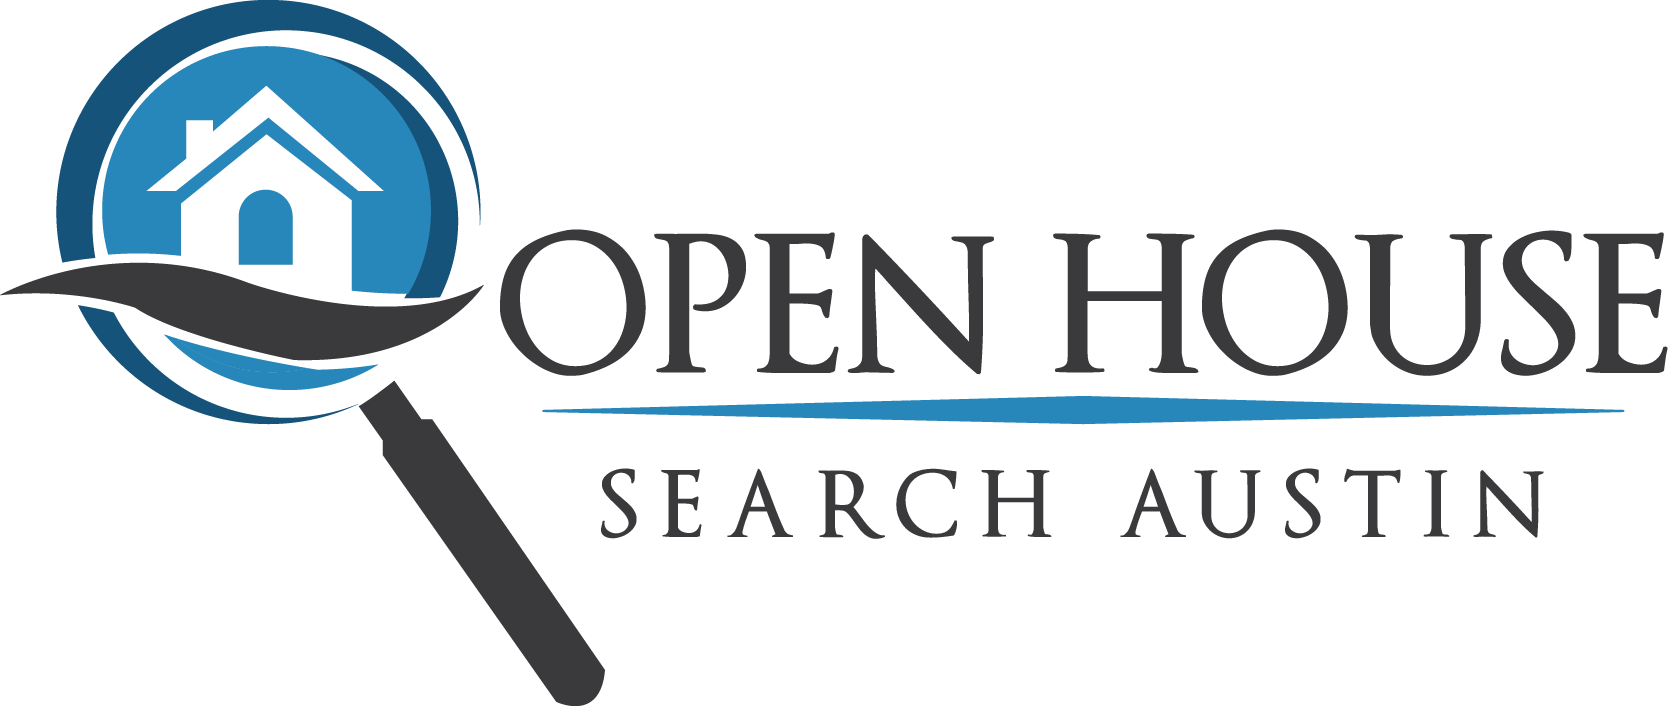 Open House Search Austin